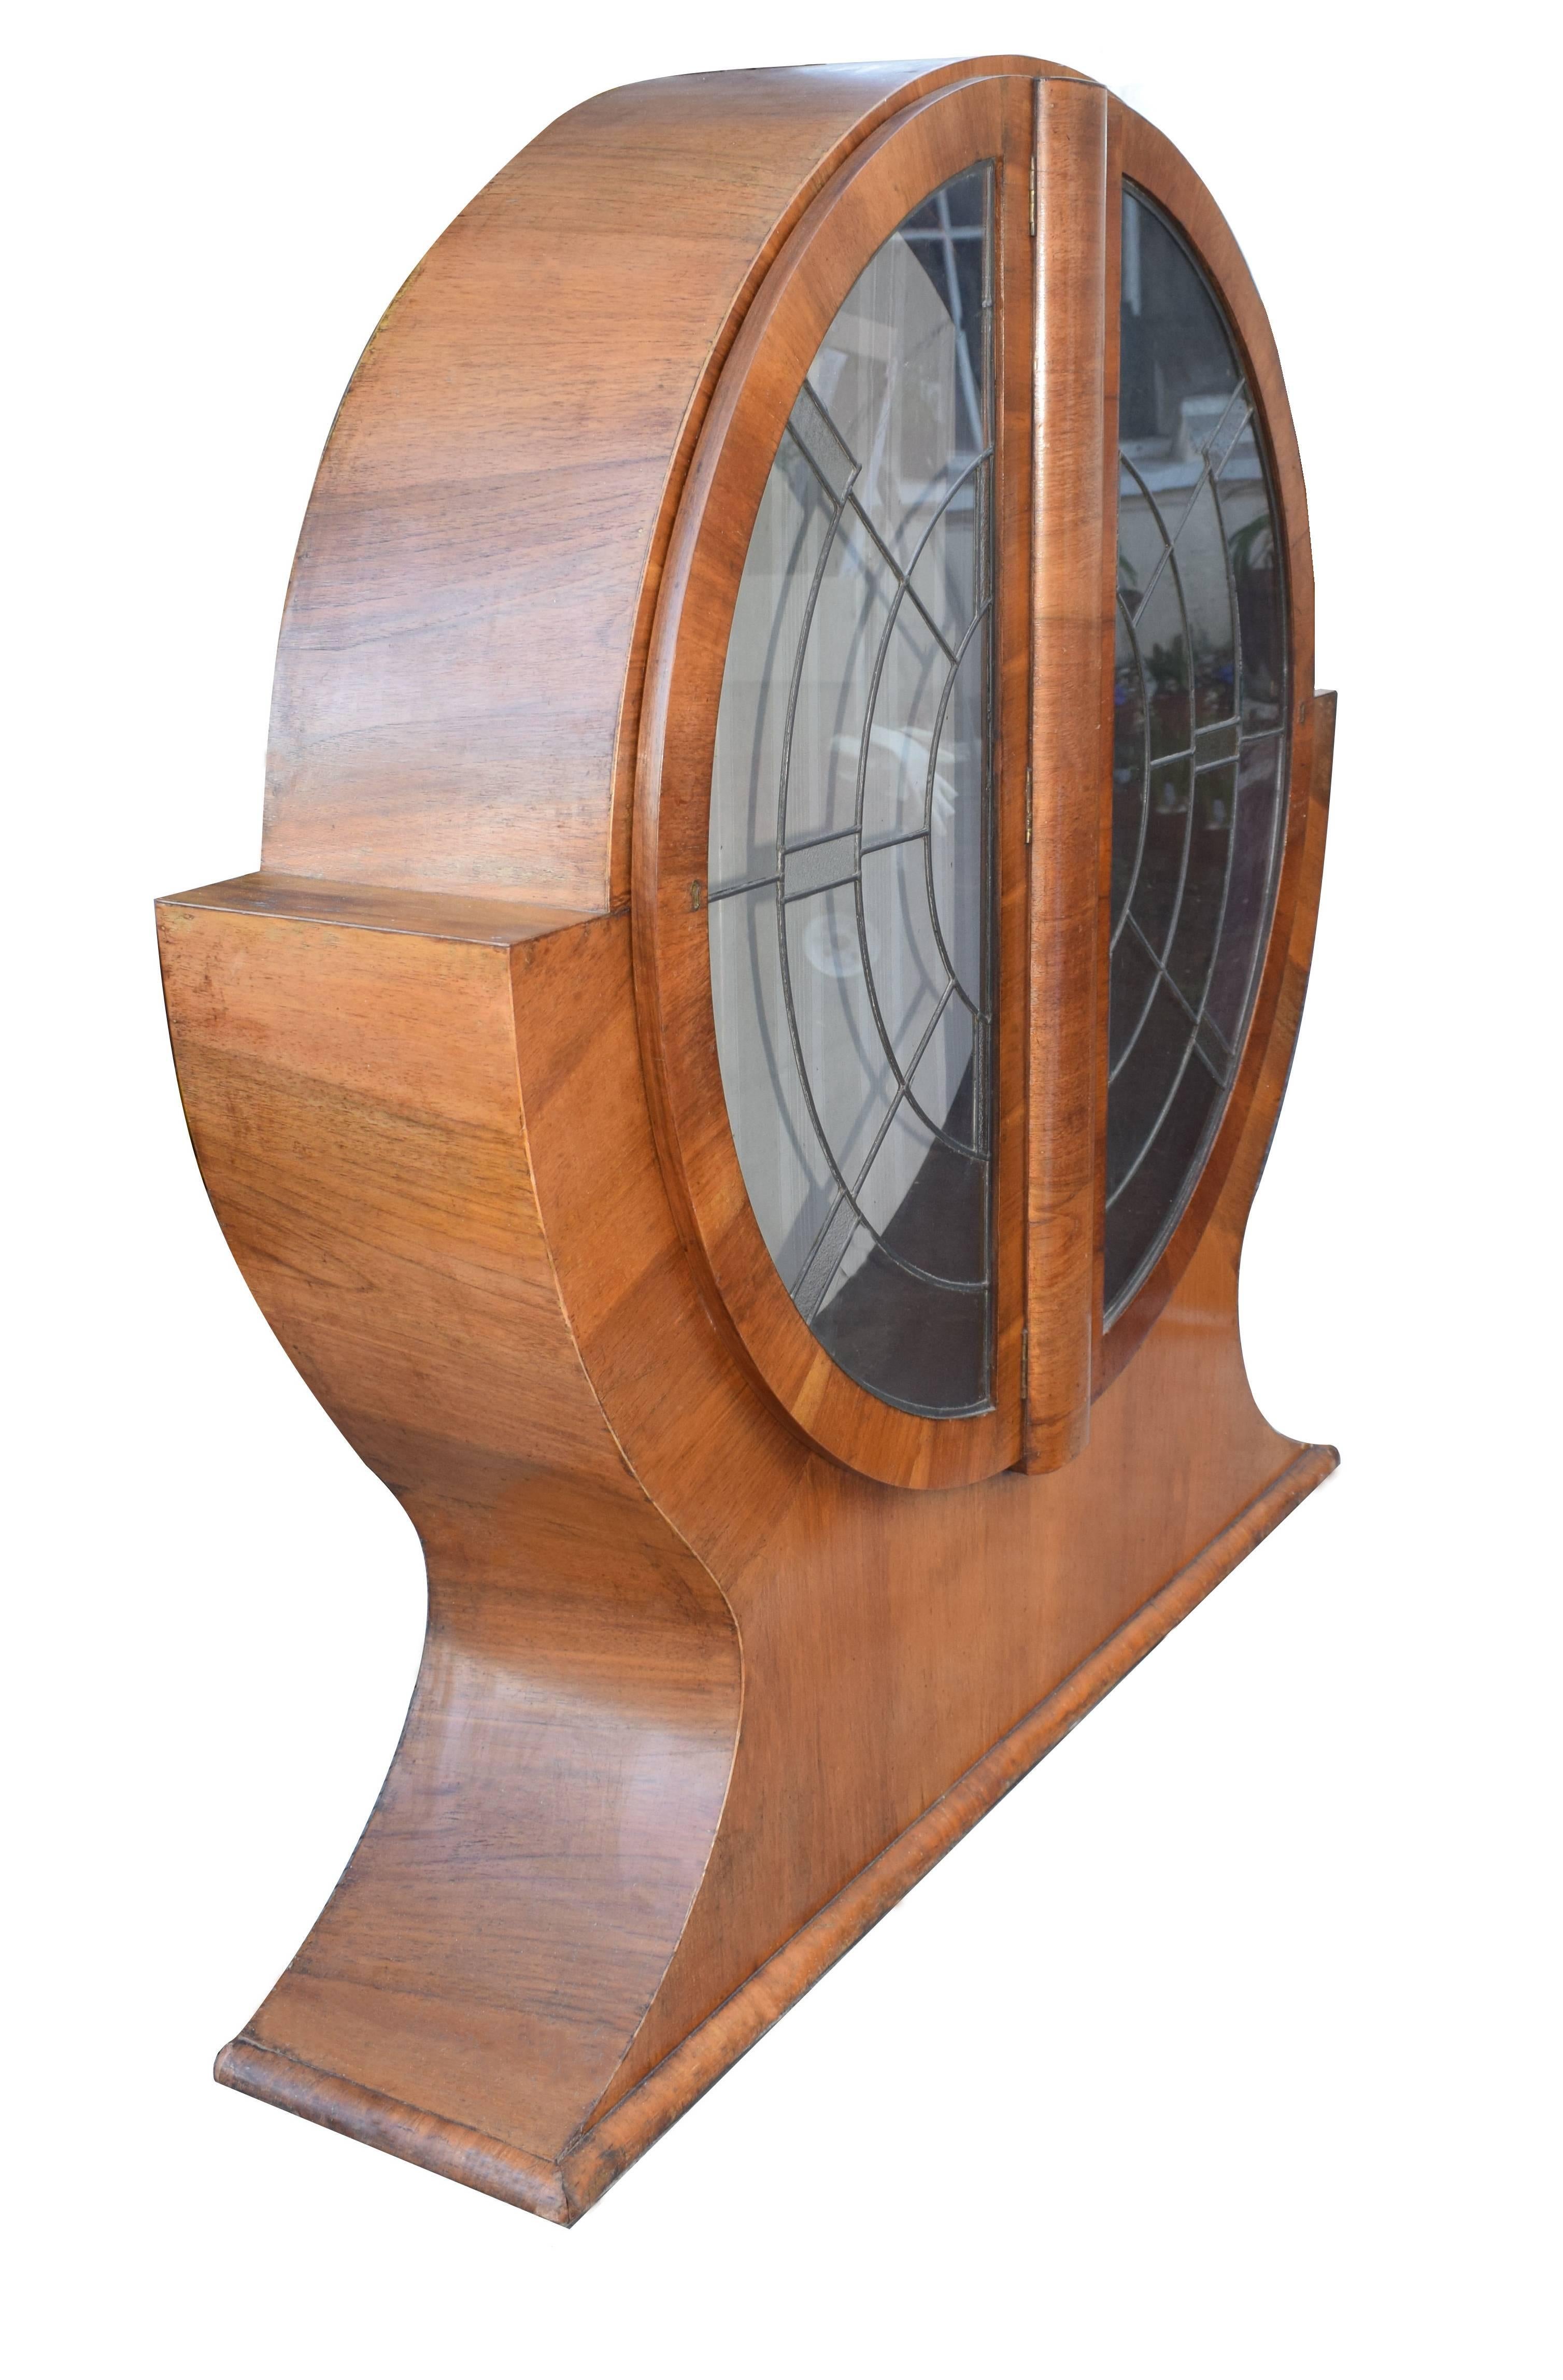 Glass 1930s English Art Deco Circular Display Cabinet in Walnut